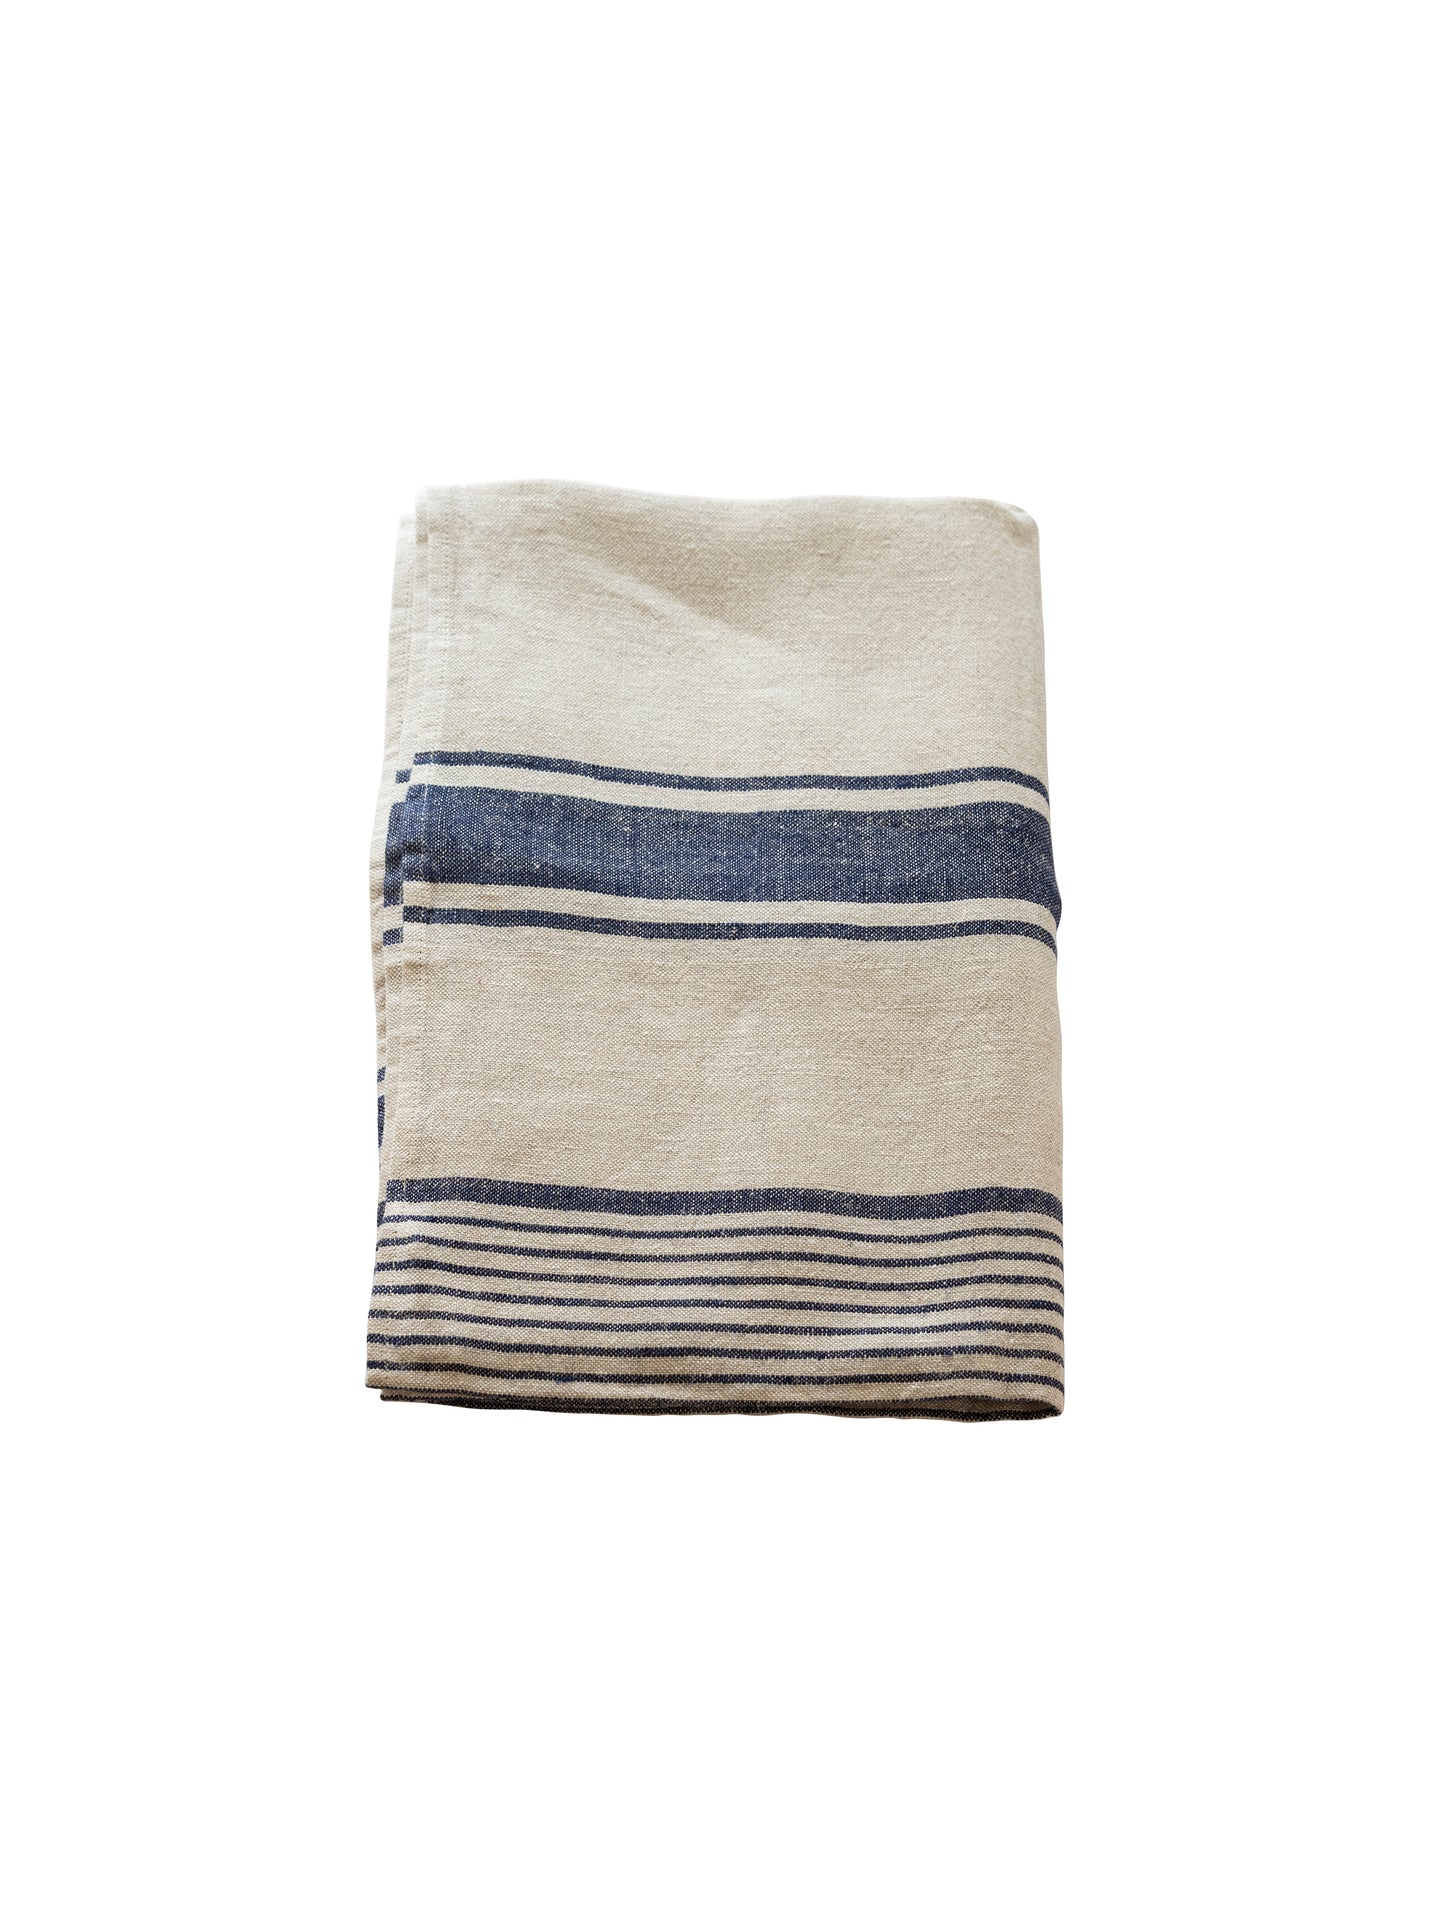 Provence Bath Towel Flax and Navy Stripe Weston Table